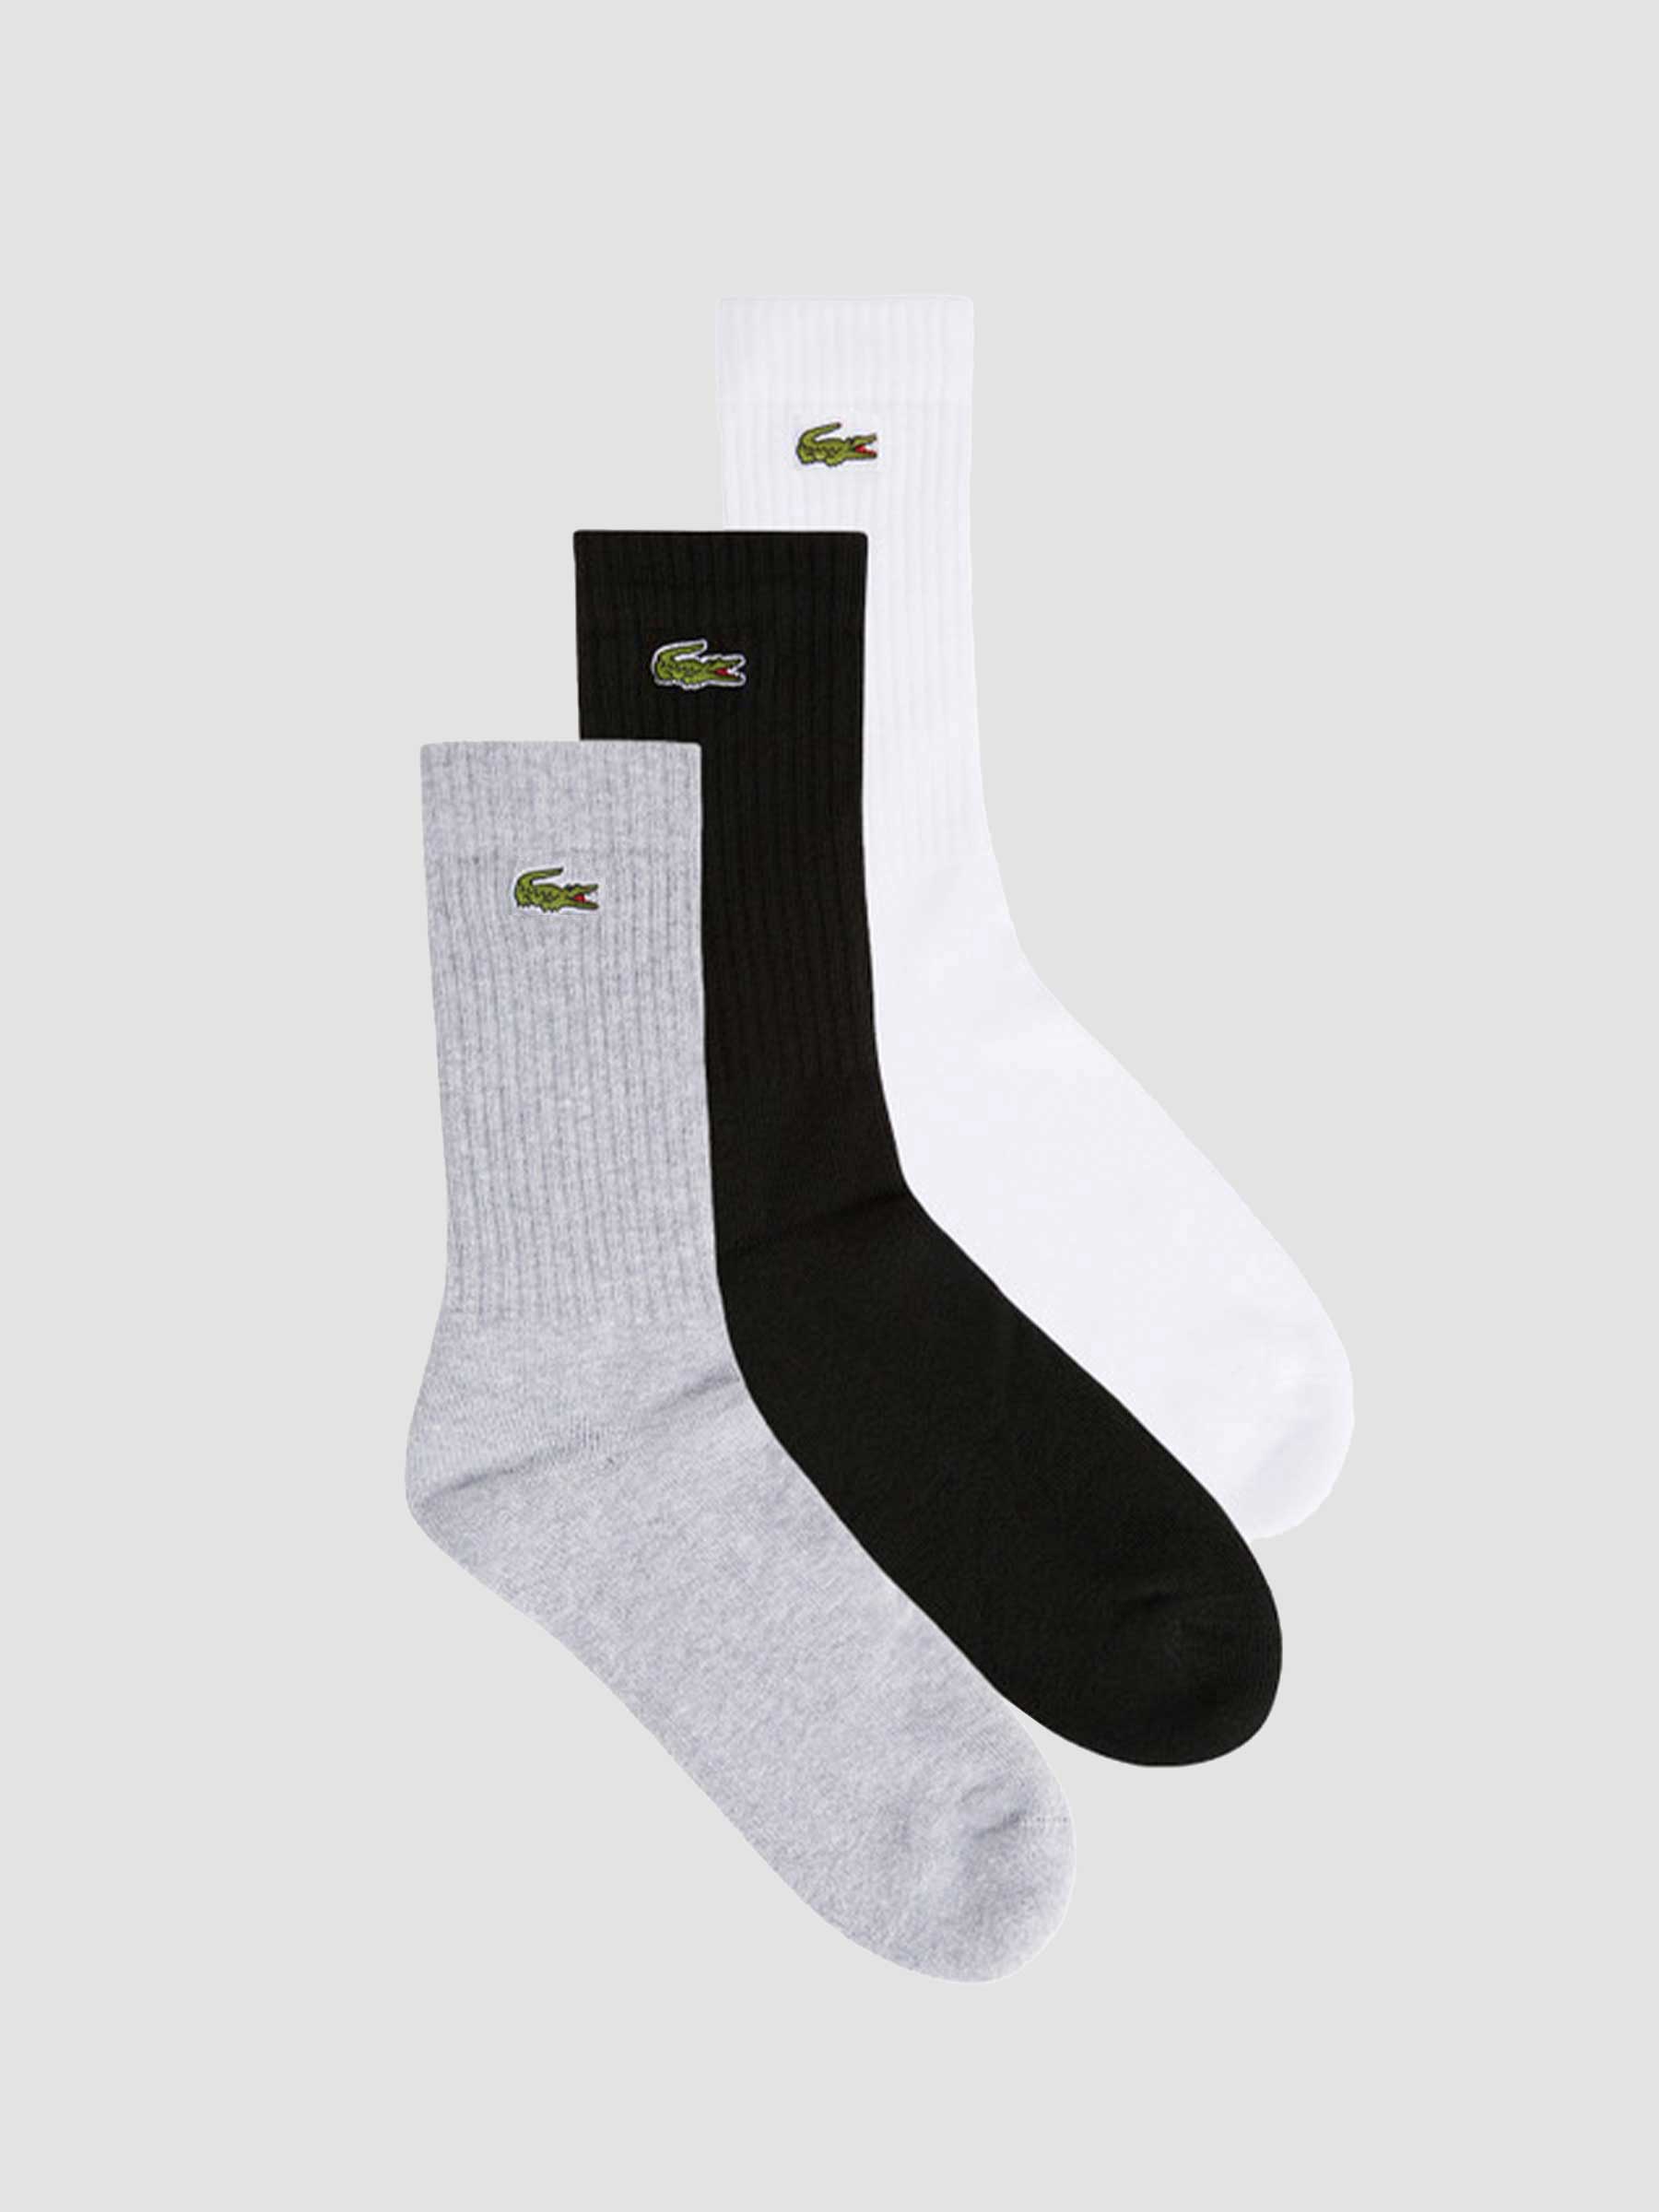 Lacoste 2G1C Socks 06 Silver Chine White-Black RA4182-23 | Freshcotton